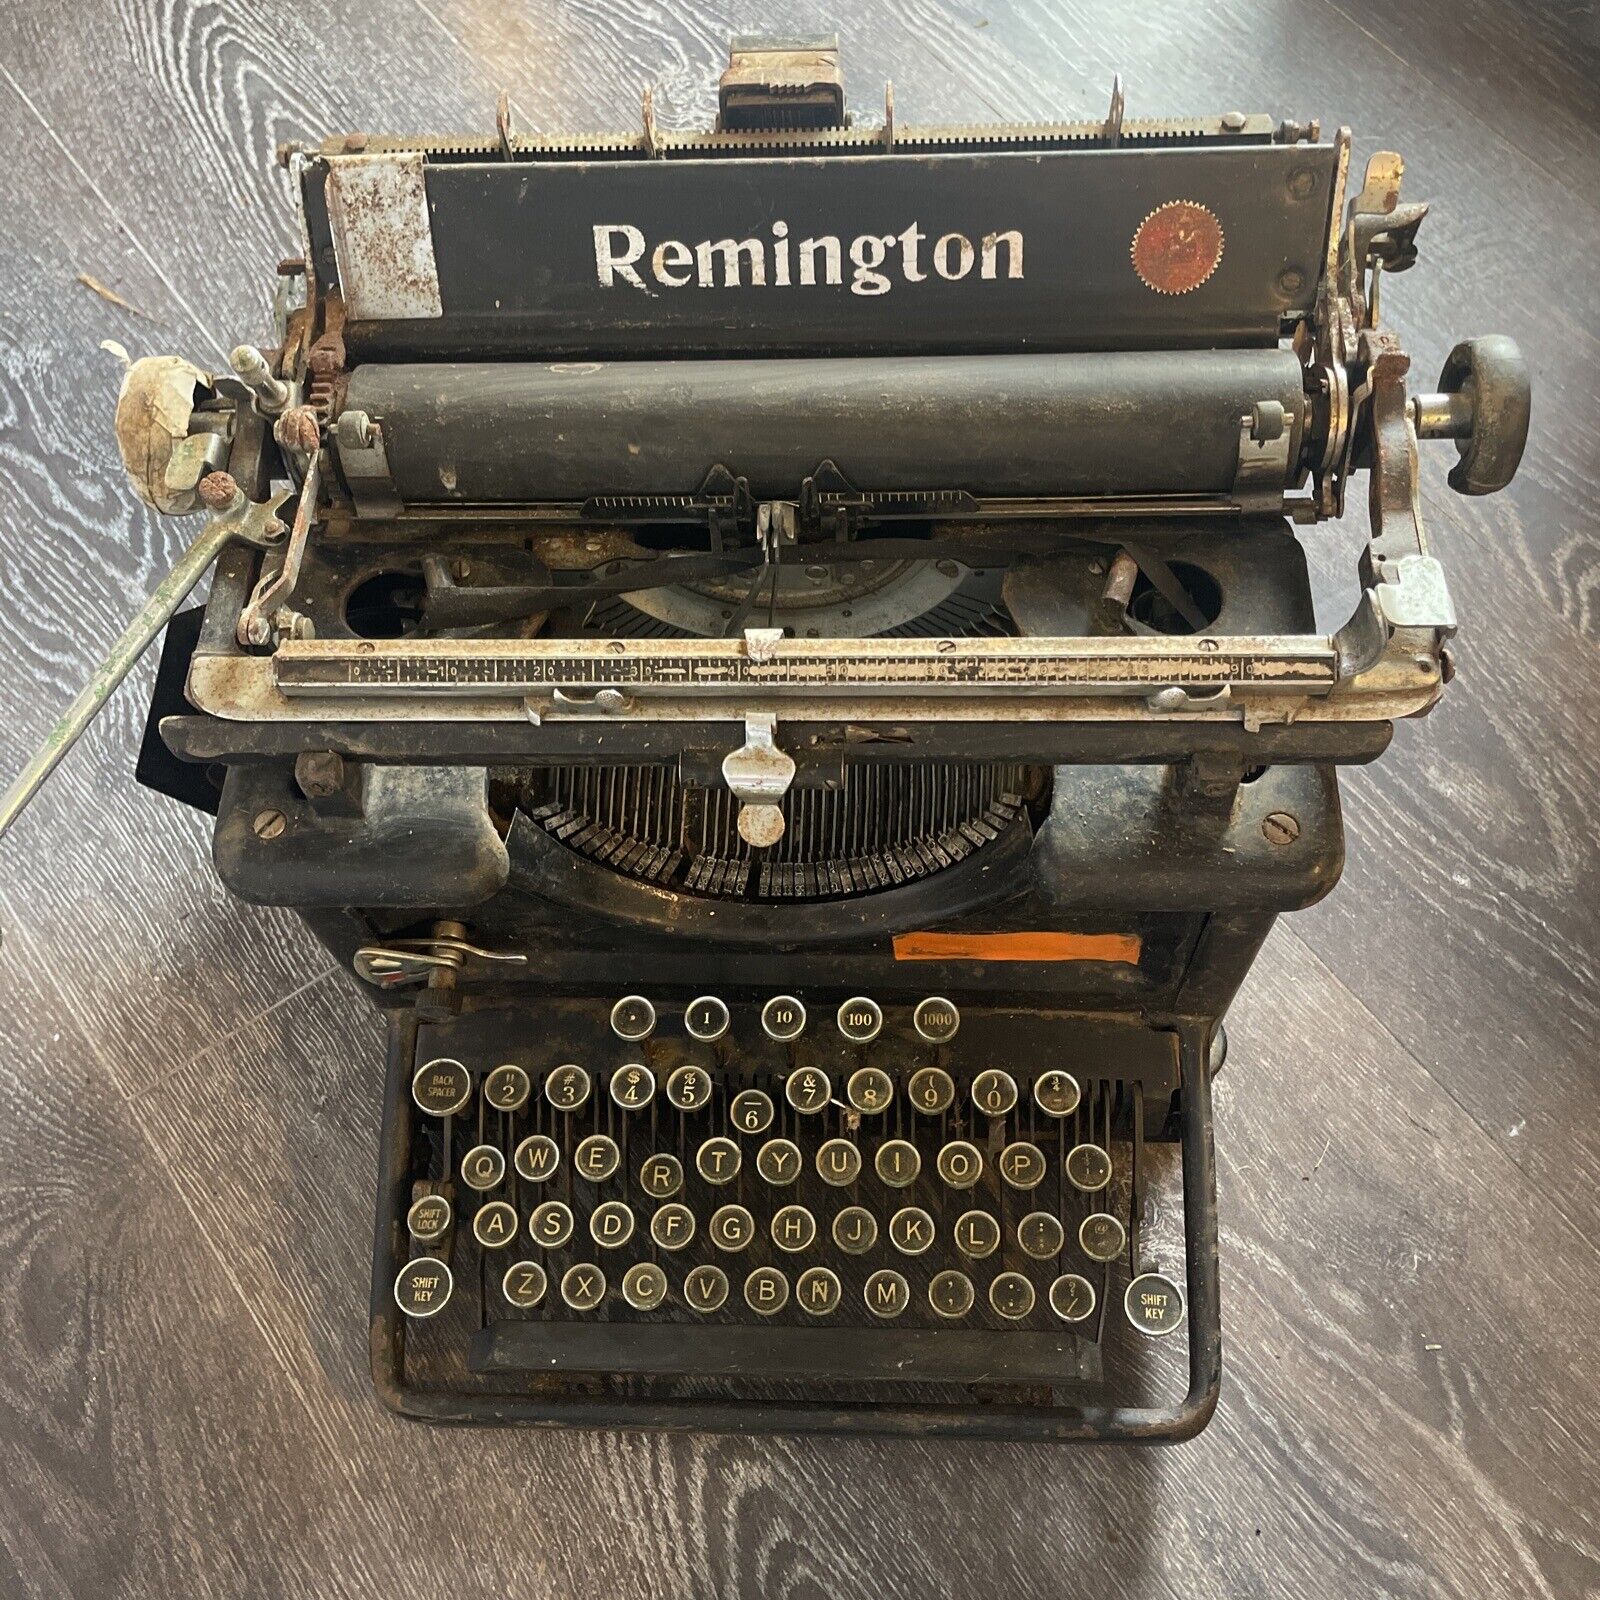 Vintage Remington Rand 16 16 Typewriter- 1930s For Parts Or Repair